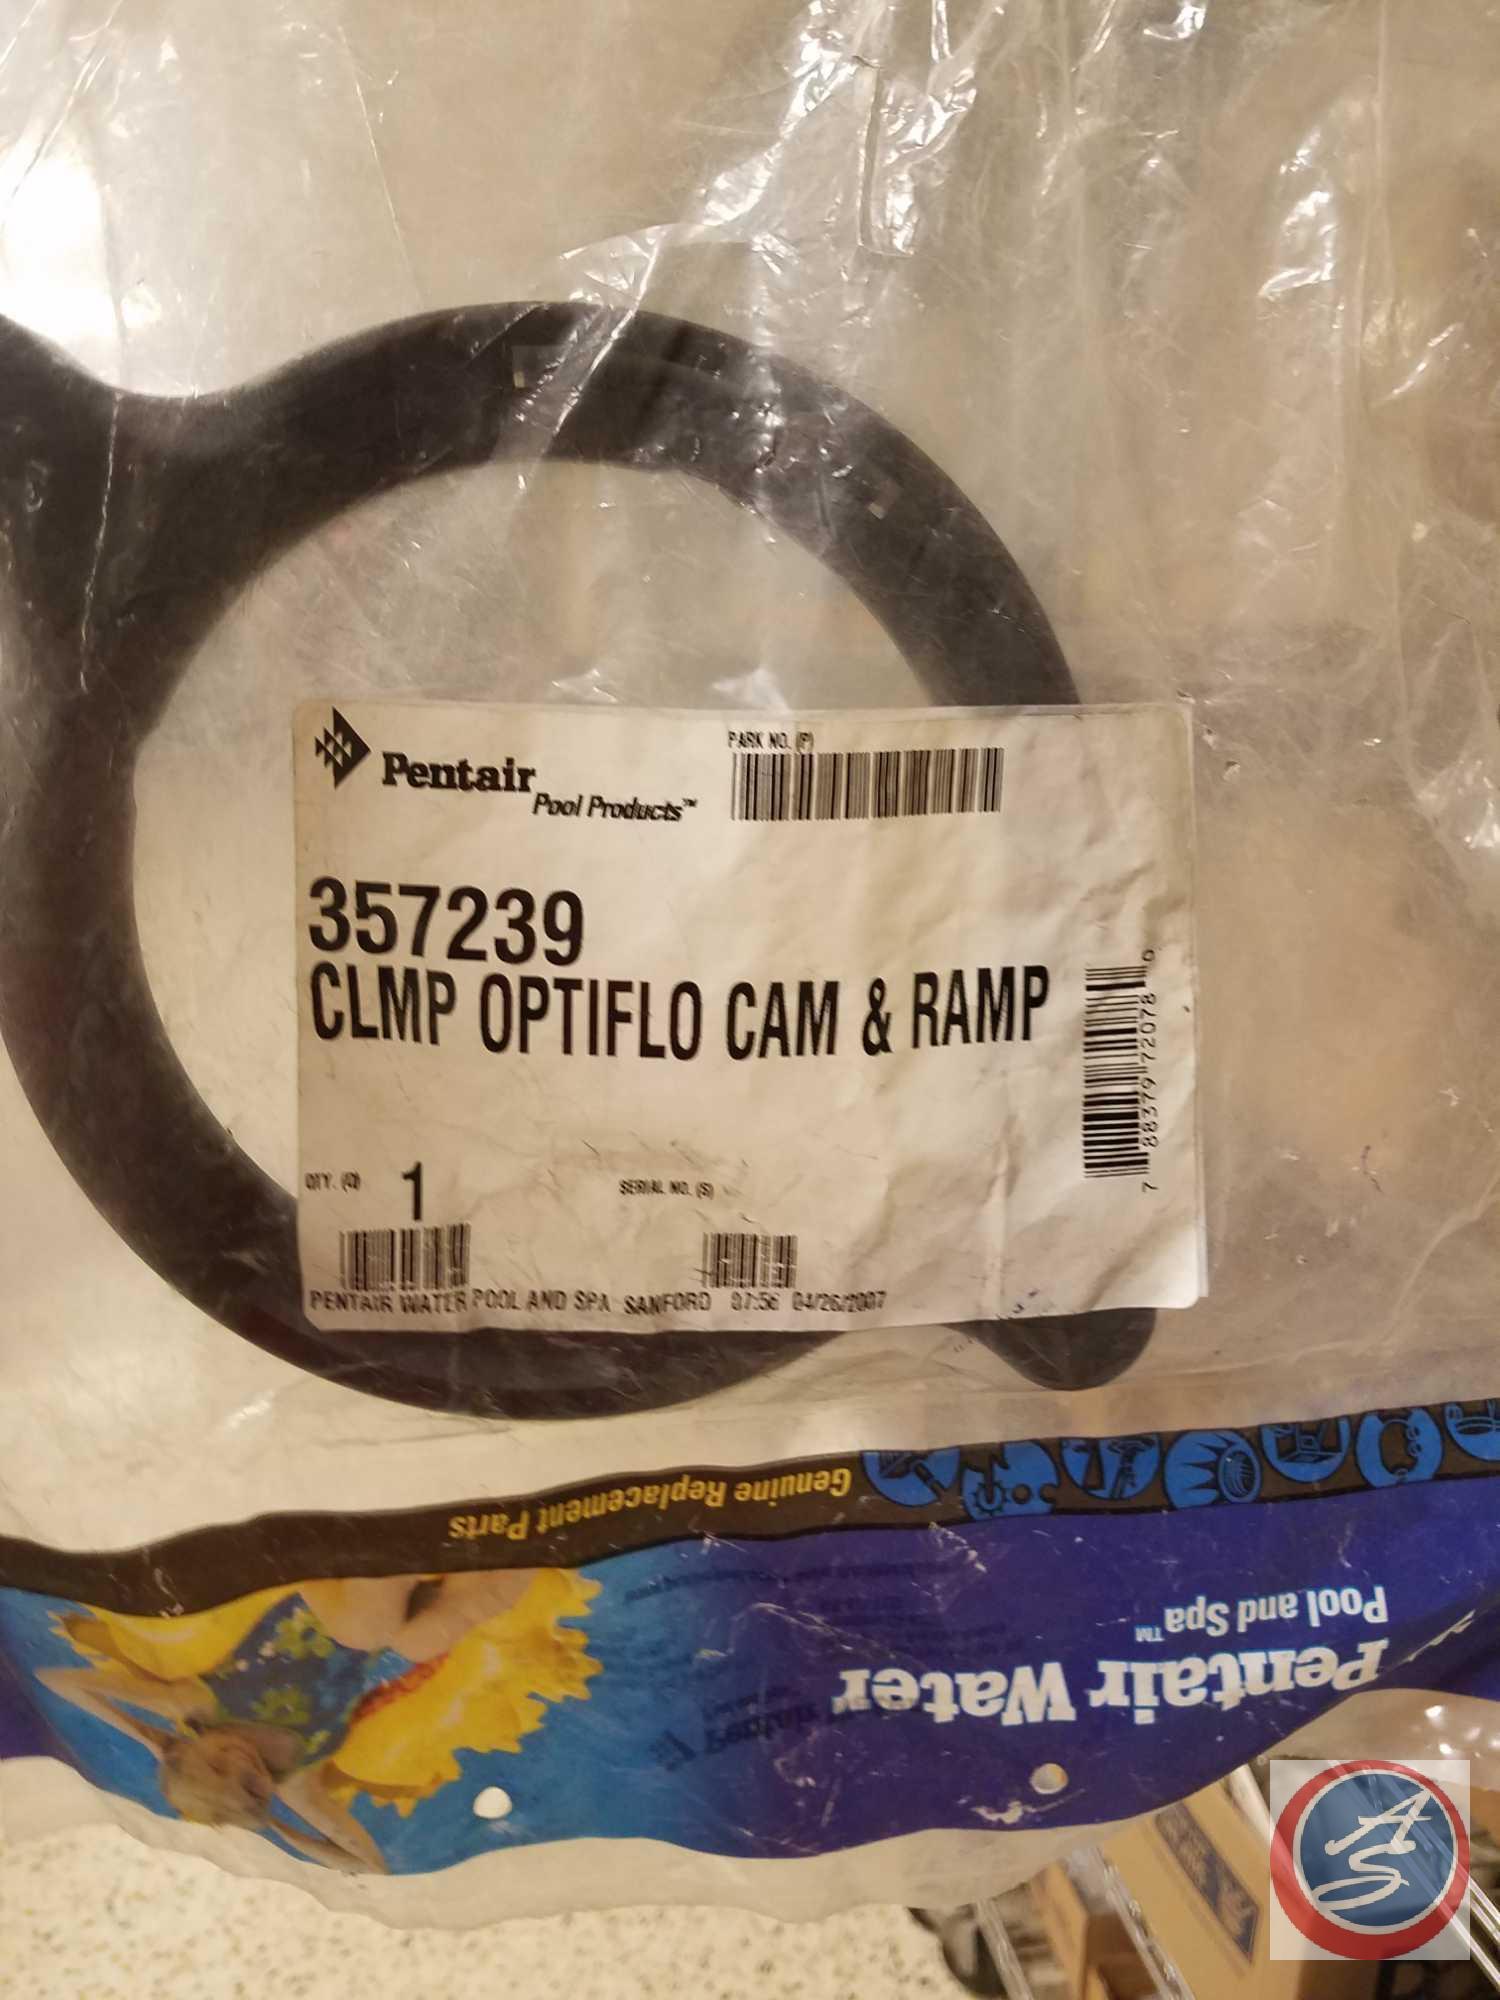 Pentair CLMP OPTIFLO Cam and Ramp Part #357239, Hayword Seal Plate 2.5 & 3 HP, Jet Body Nut Part